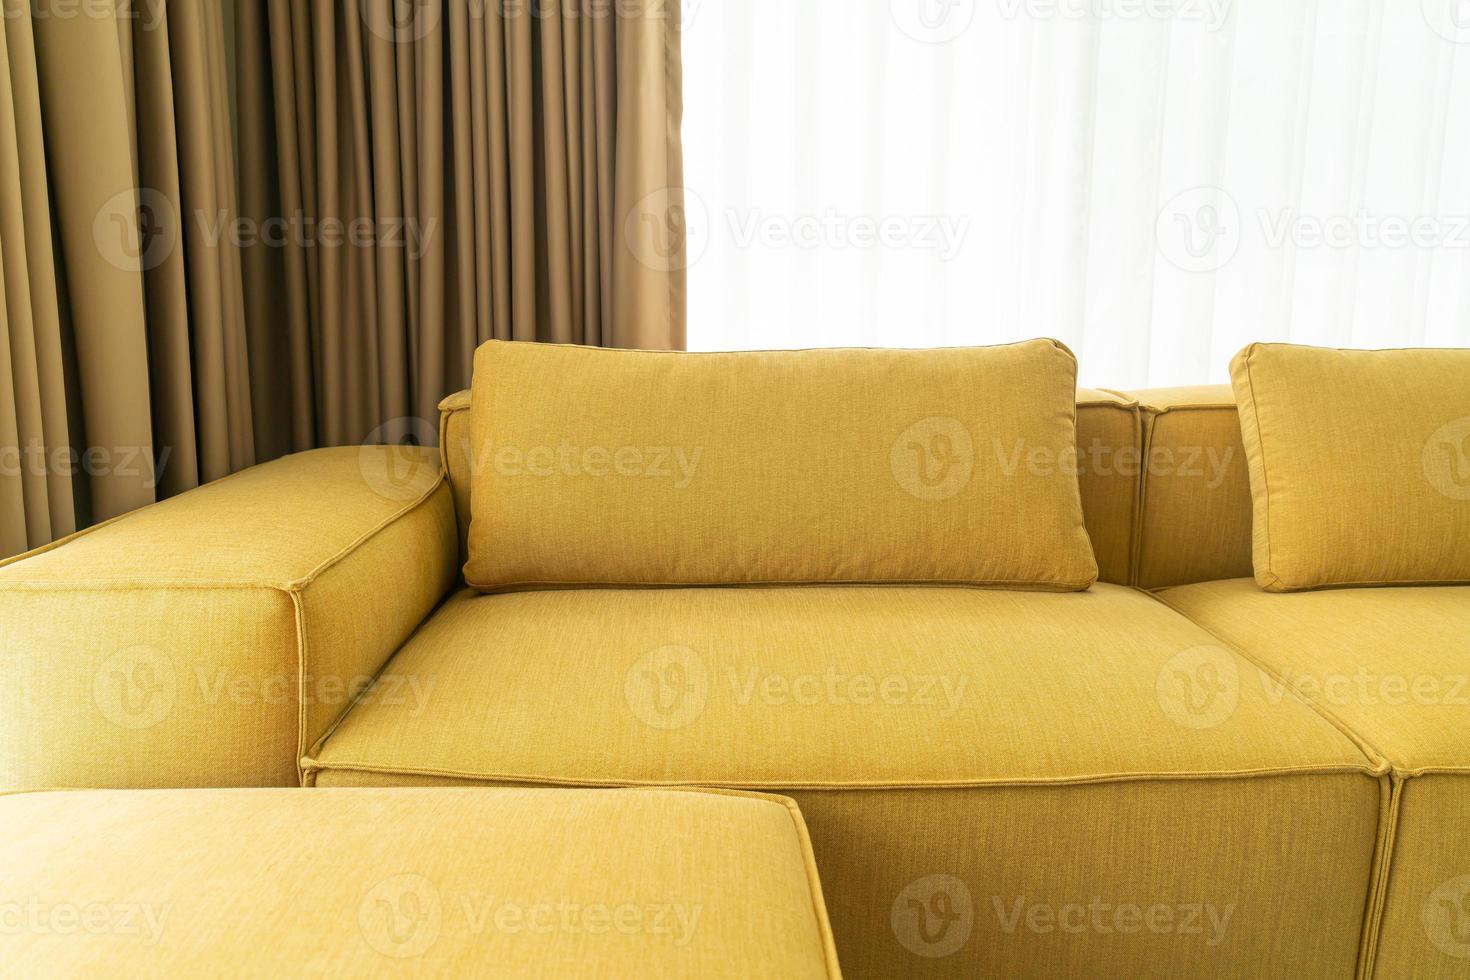 Tom gul tyg soffa dekoration inredning i vardagsrummet hemma foto